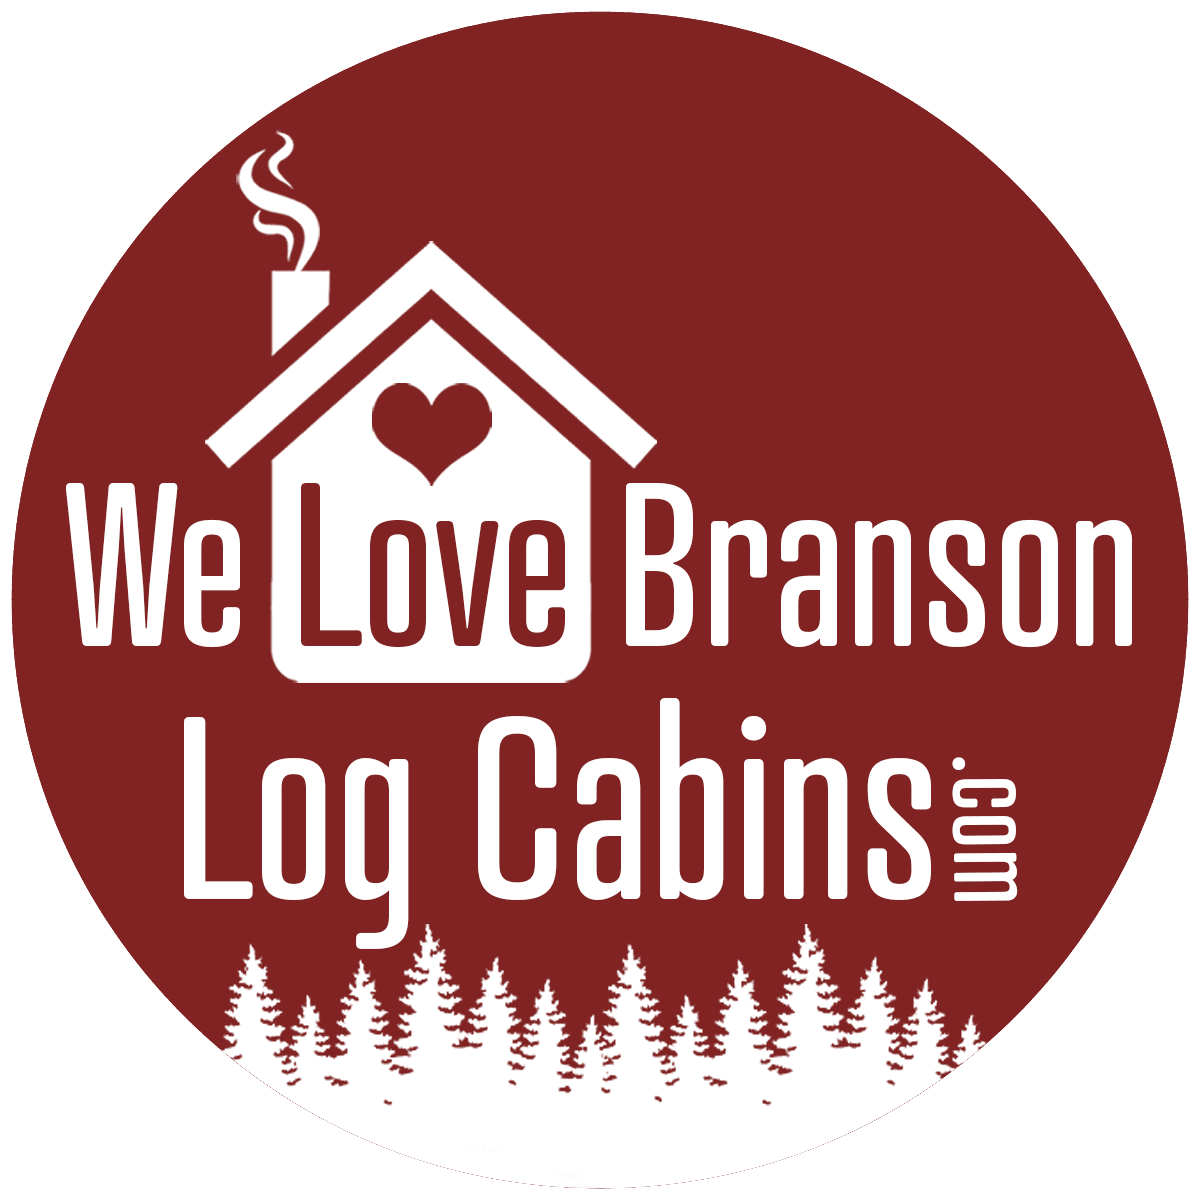 We Love Branson Log Cabins